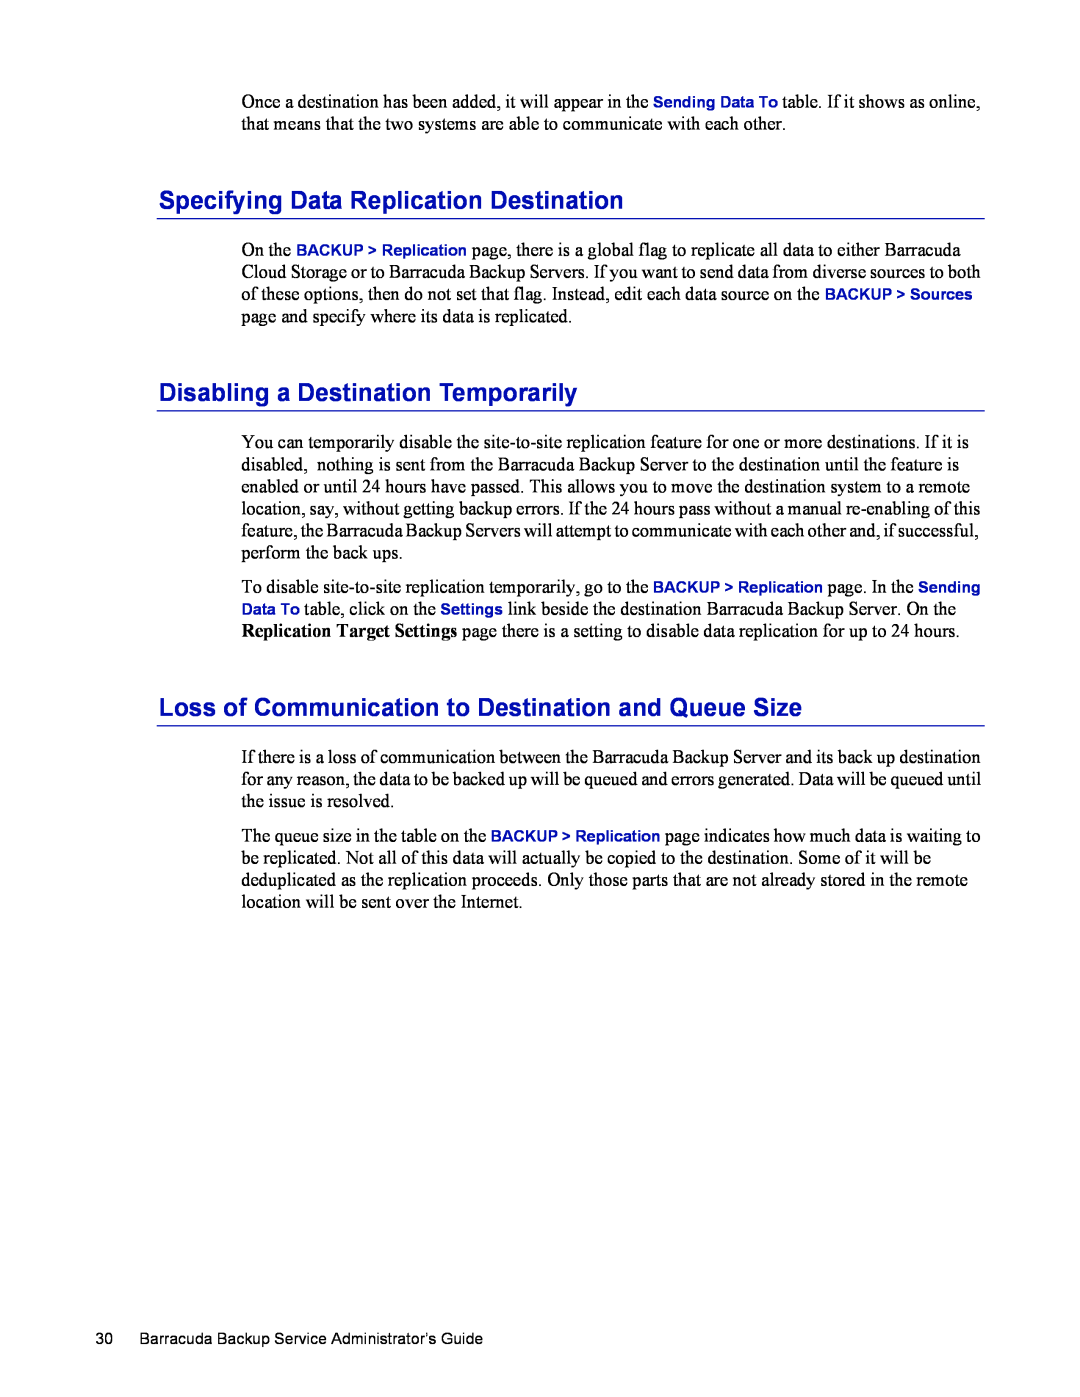 Barracuda Networks 4 manual Specifying Data Replication Destination, Disabling a Destination Temporarily 